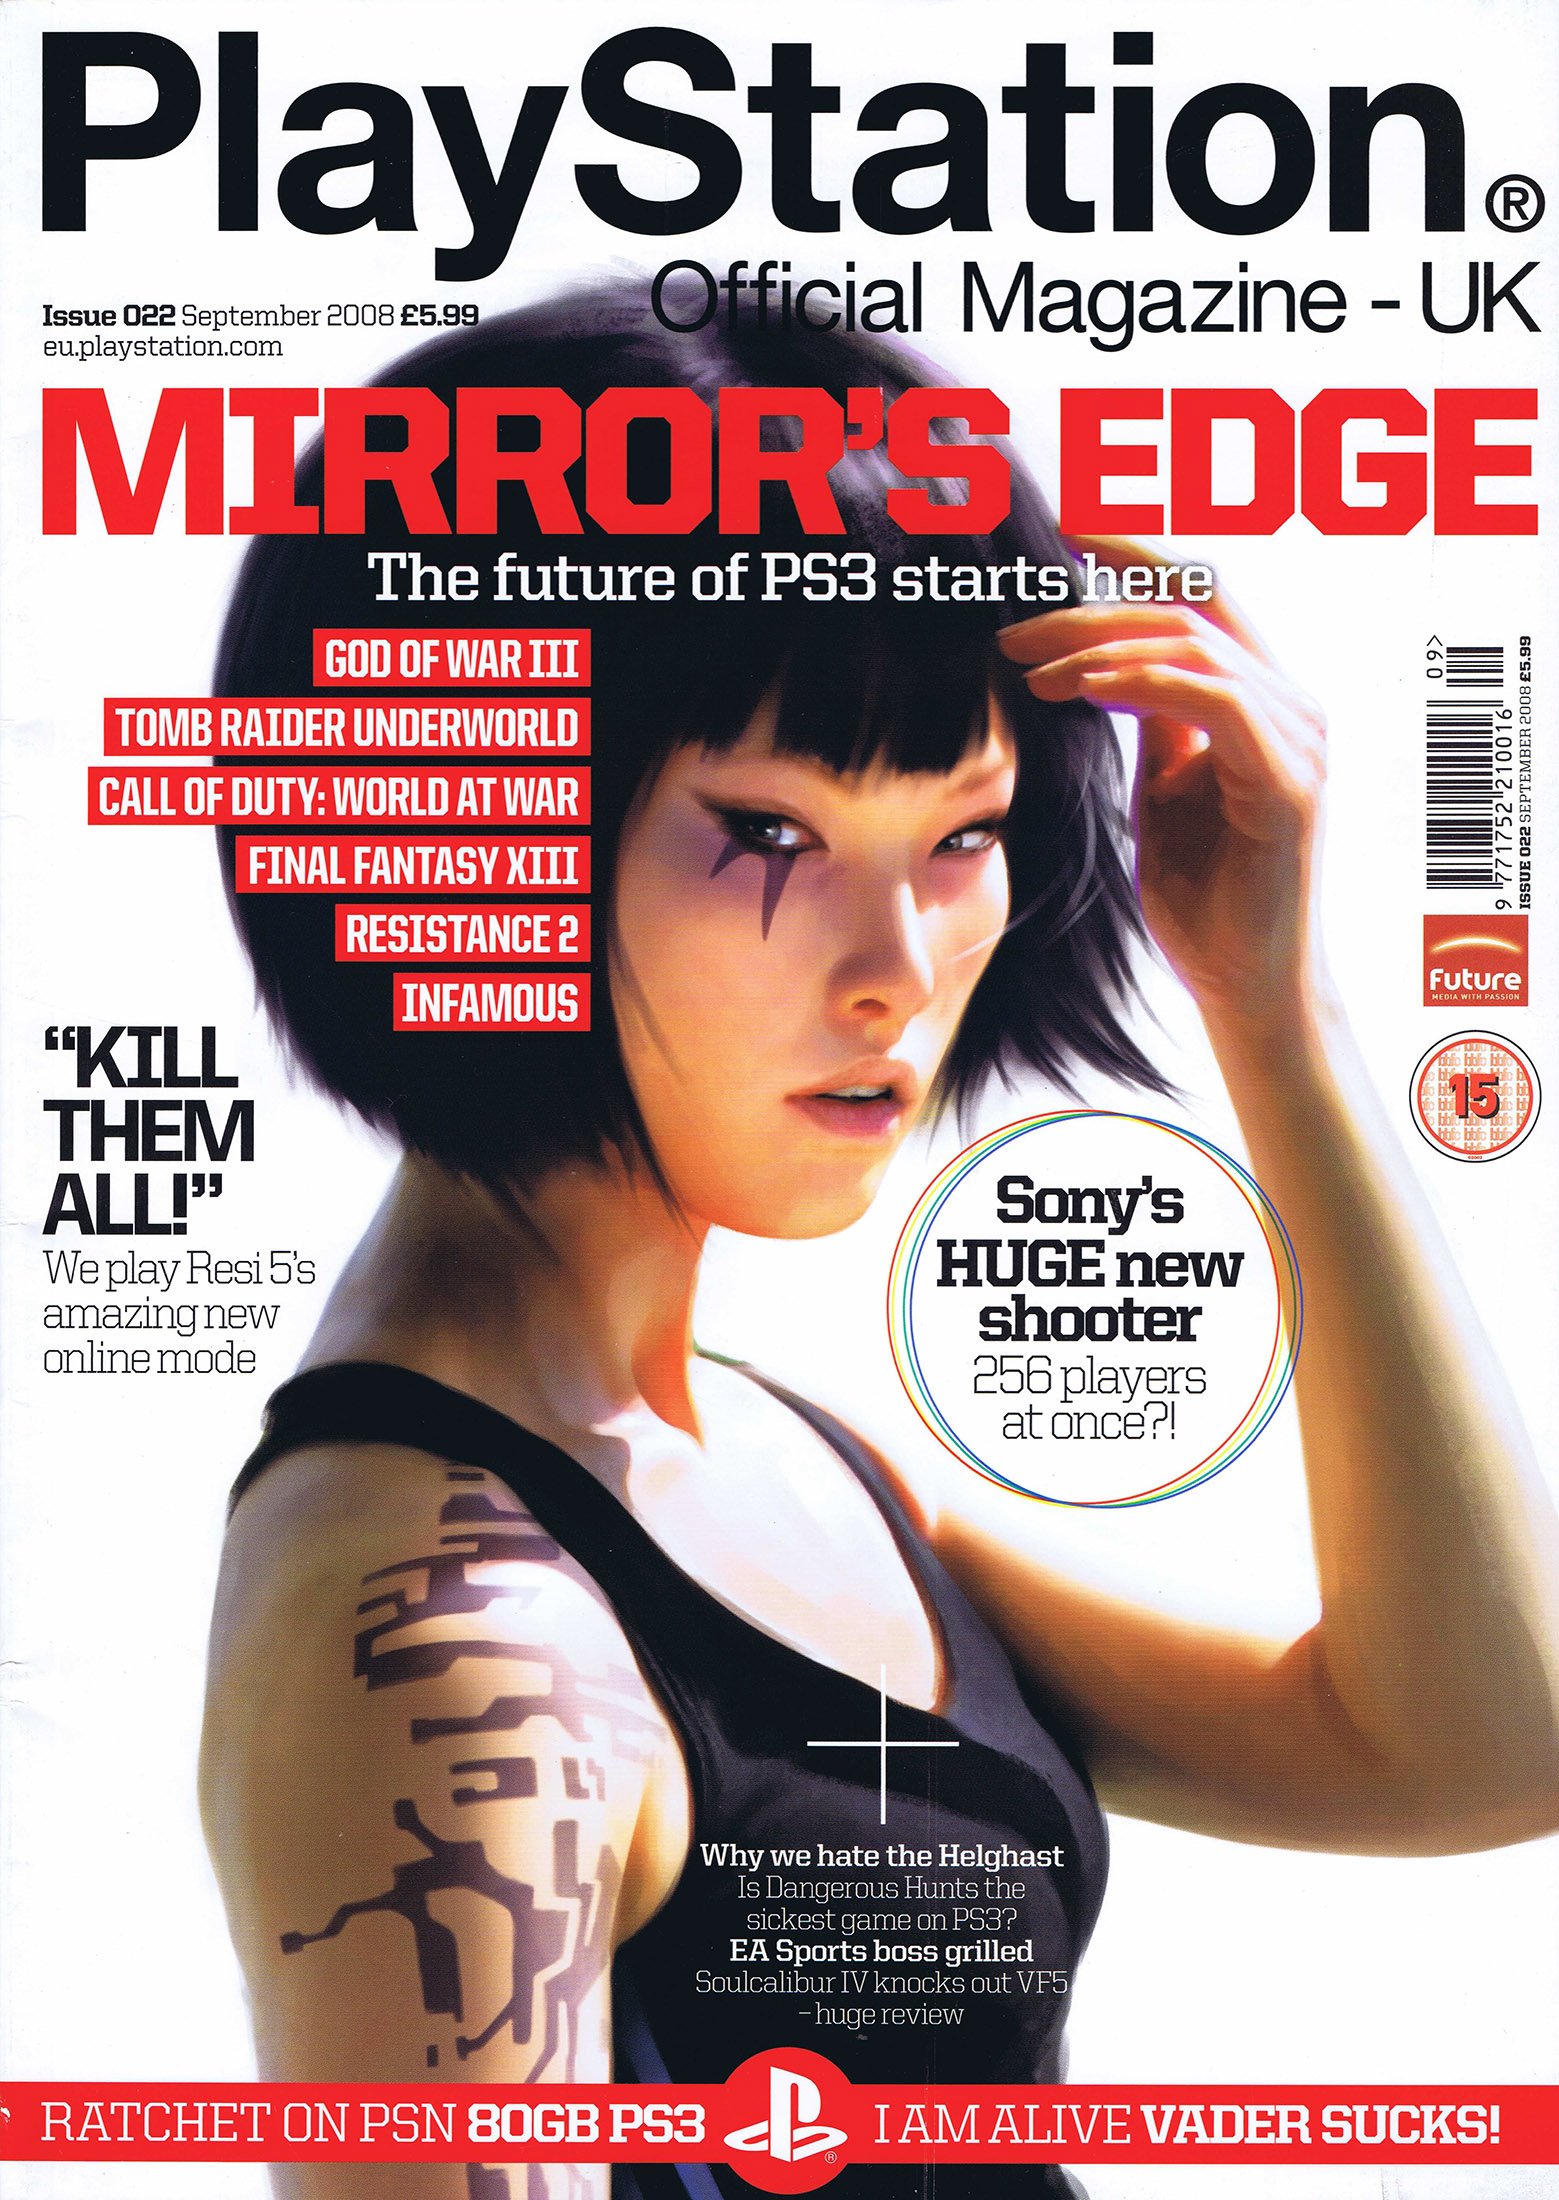 Playstation Official Magazine UK 022 (September 2008)